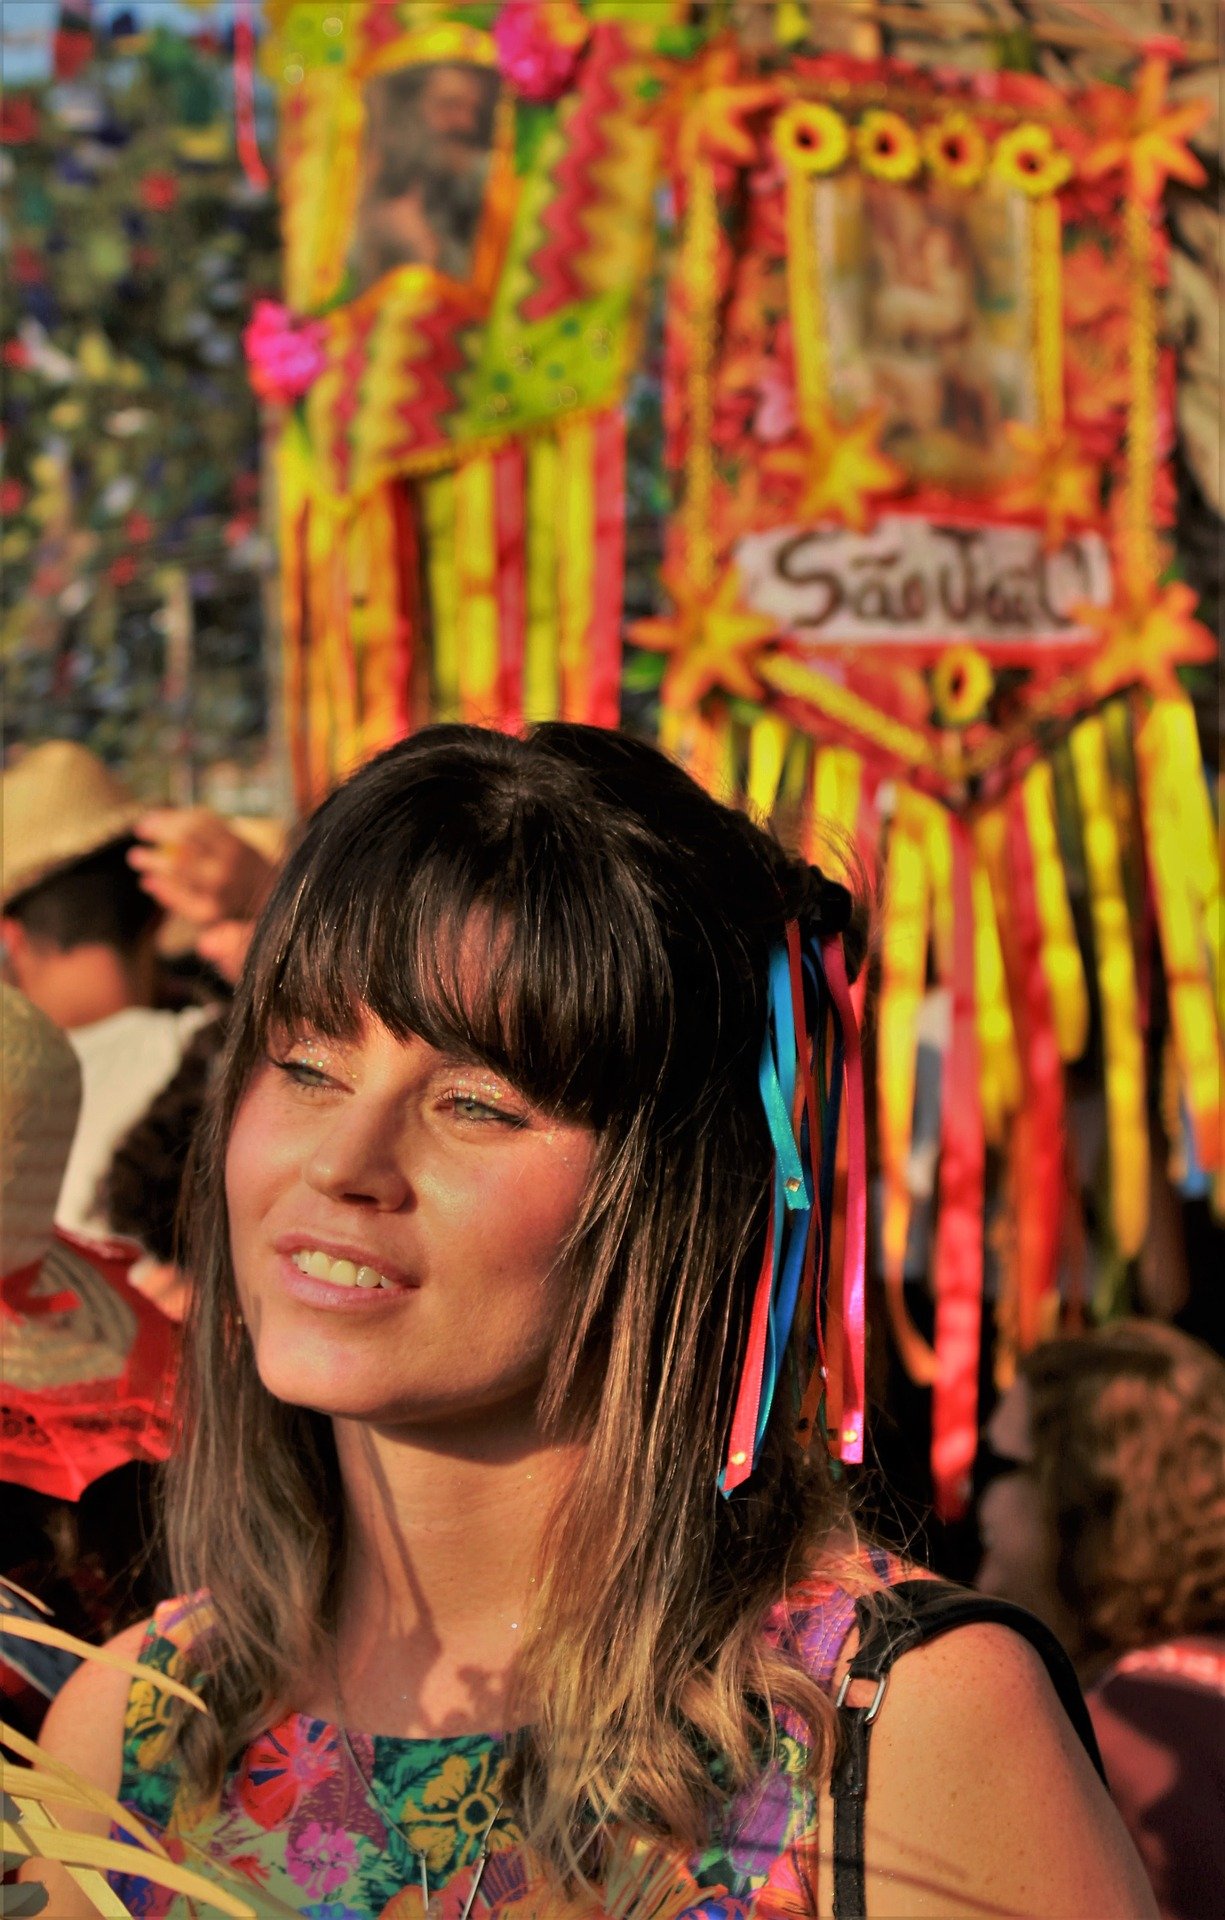 Mulher sorrindo usando roupas características de festa junina